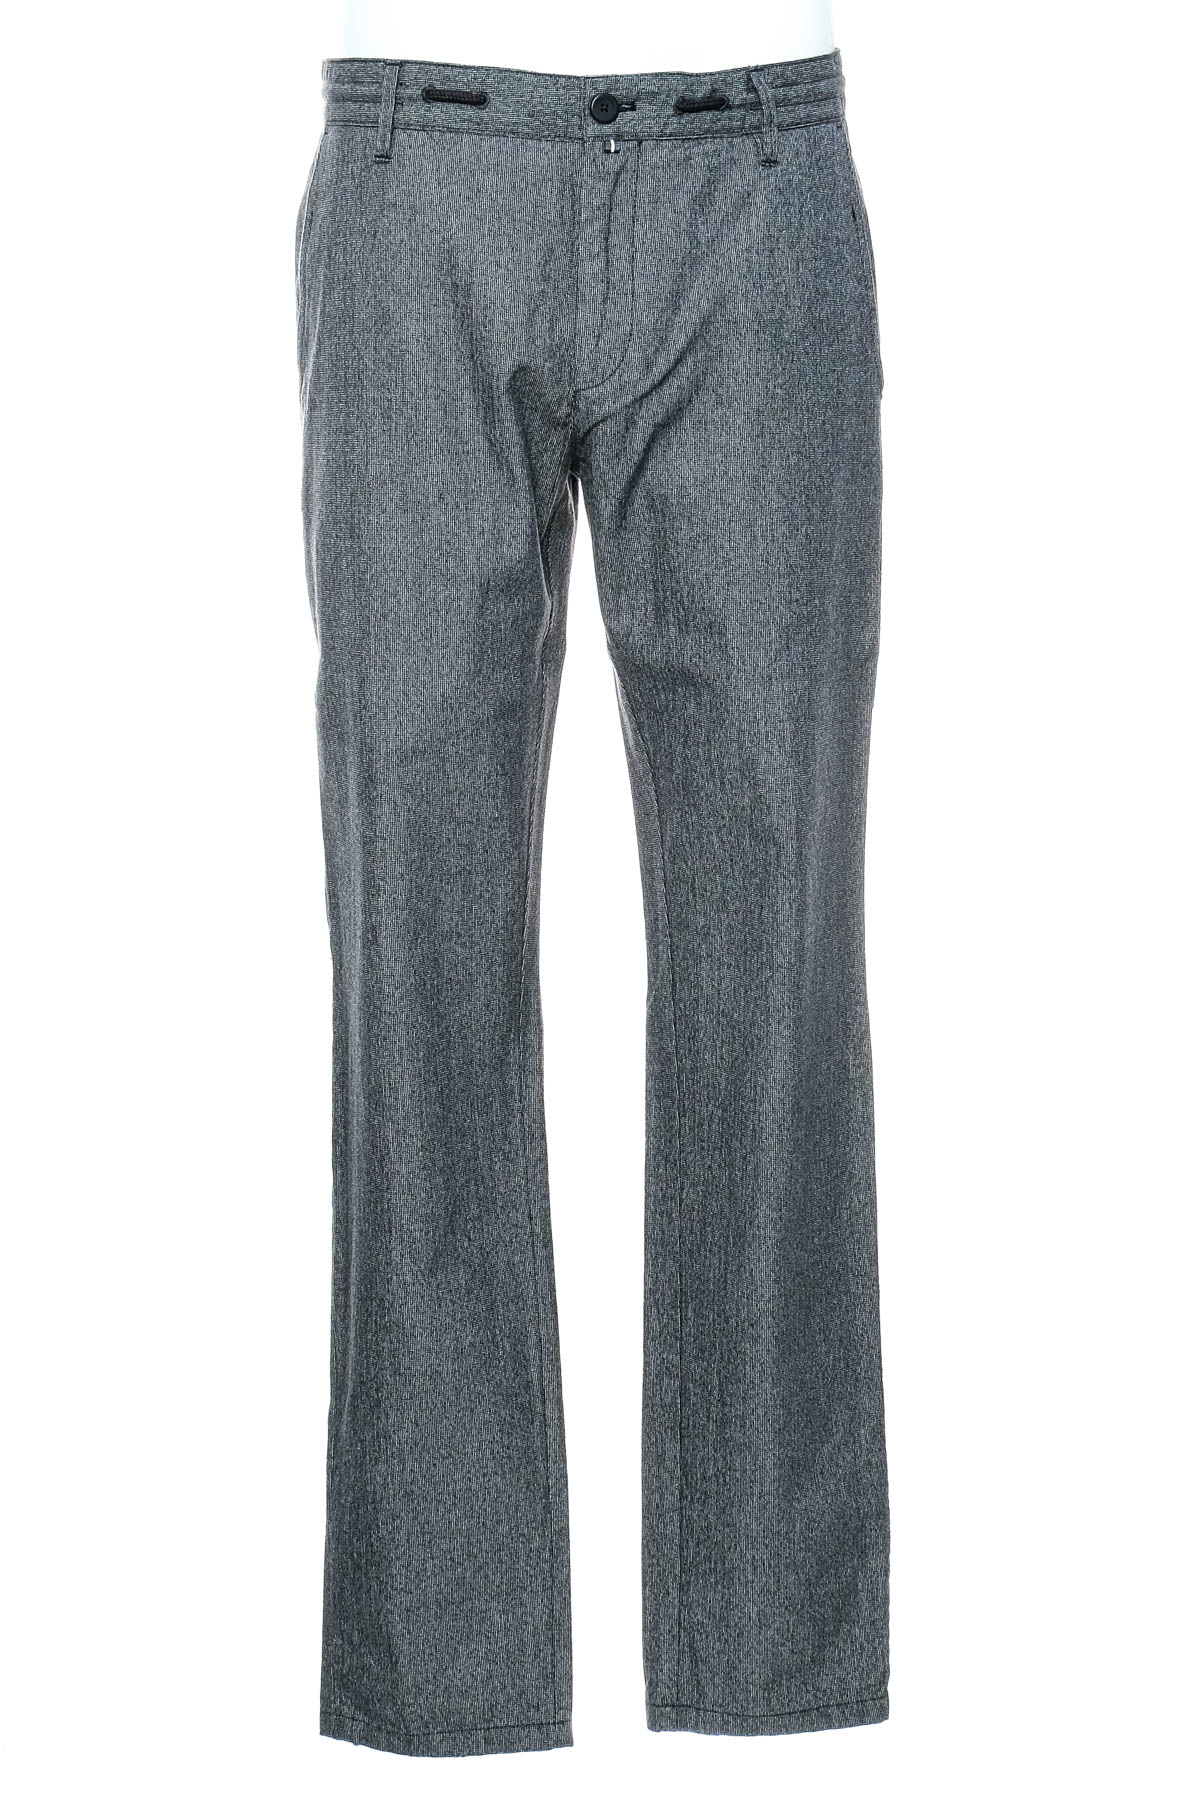 Pantalon pentru bărbați - Marc O' Polo - 0